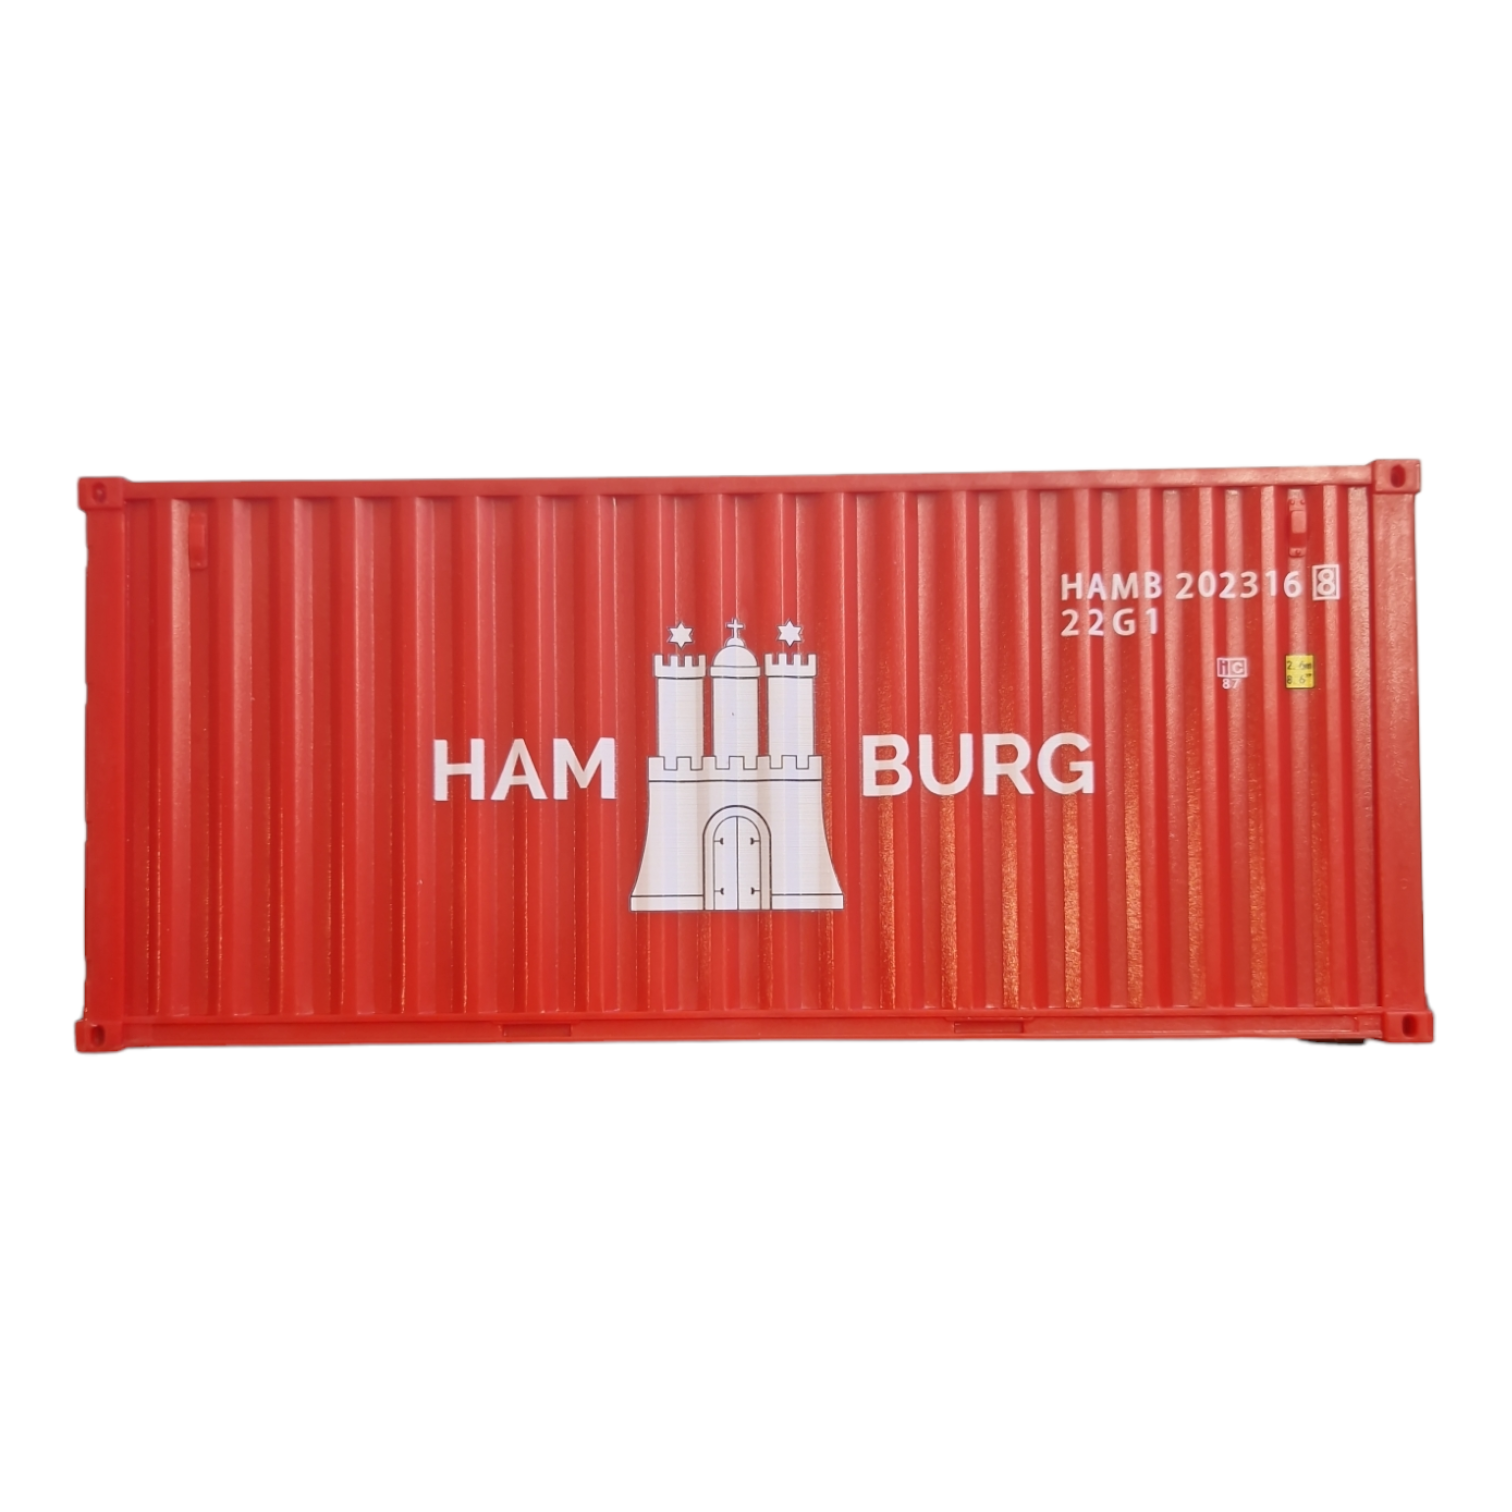 Brush & Card Pod Aufbewahrungsbox Toolbox Container Hamburg Motiv